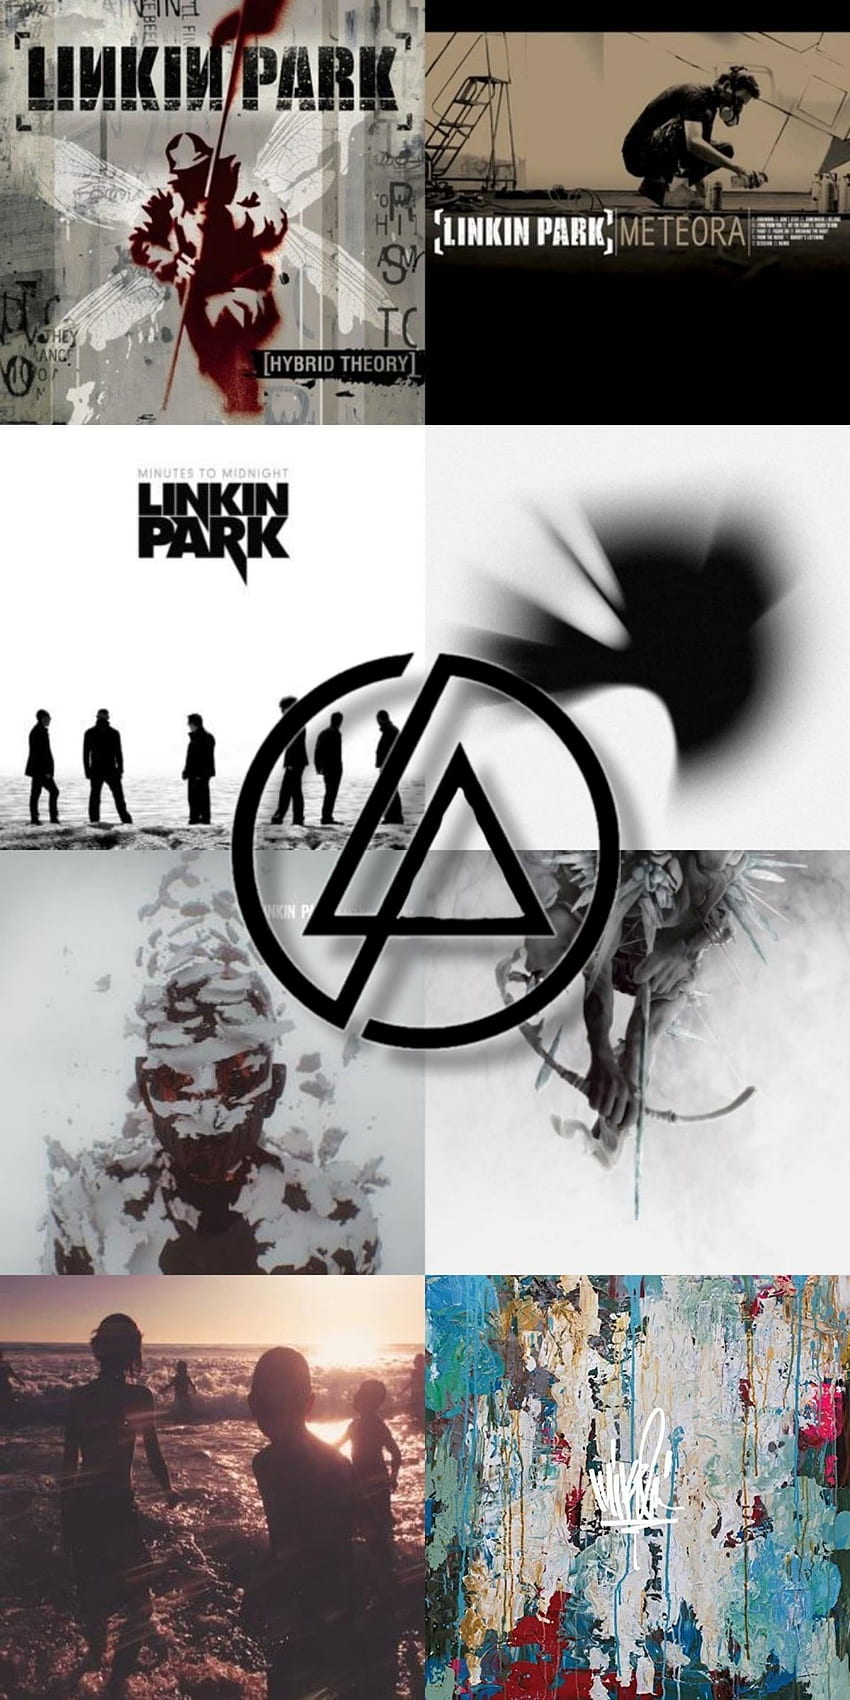 Membuat yang baru untuk ponsel saya :D : LinkinPark, Linkin Park Meteora wallpaper ponsel HD